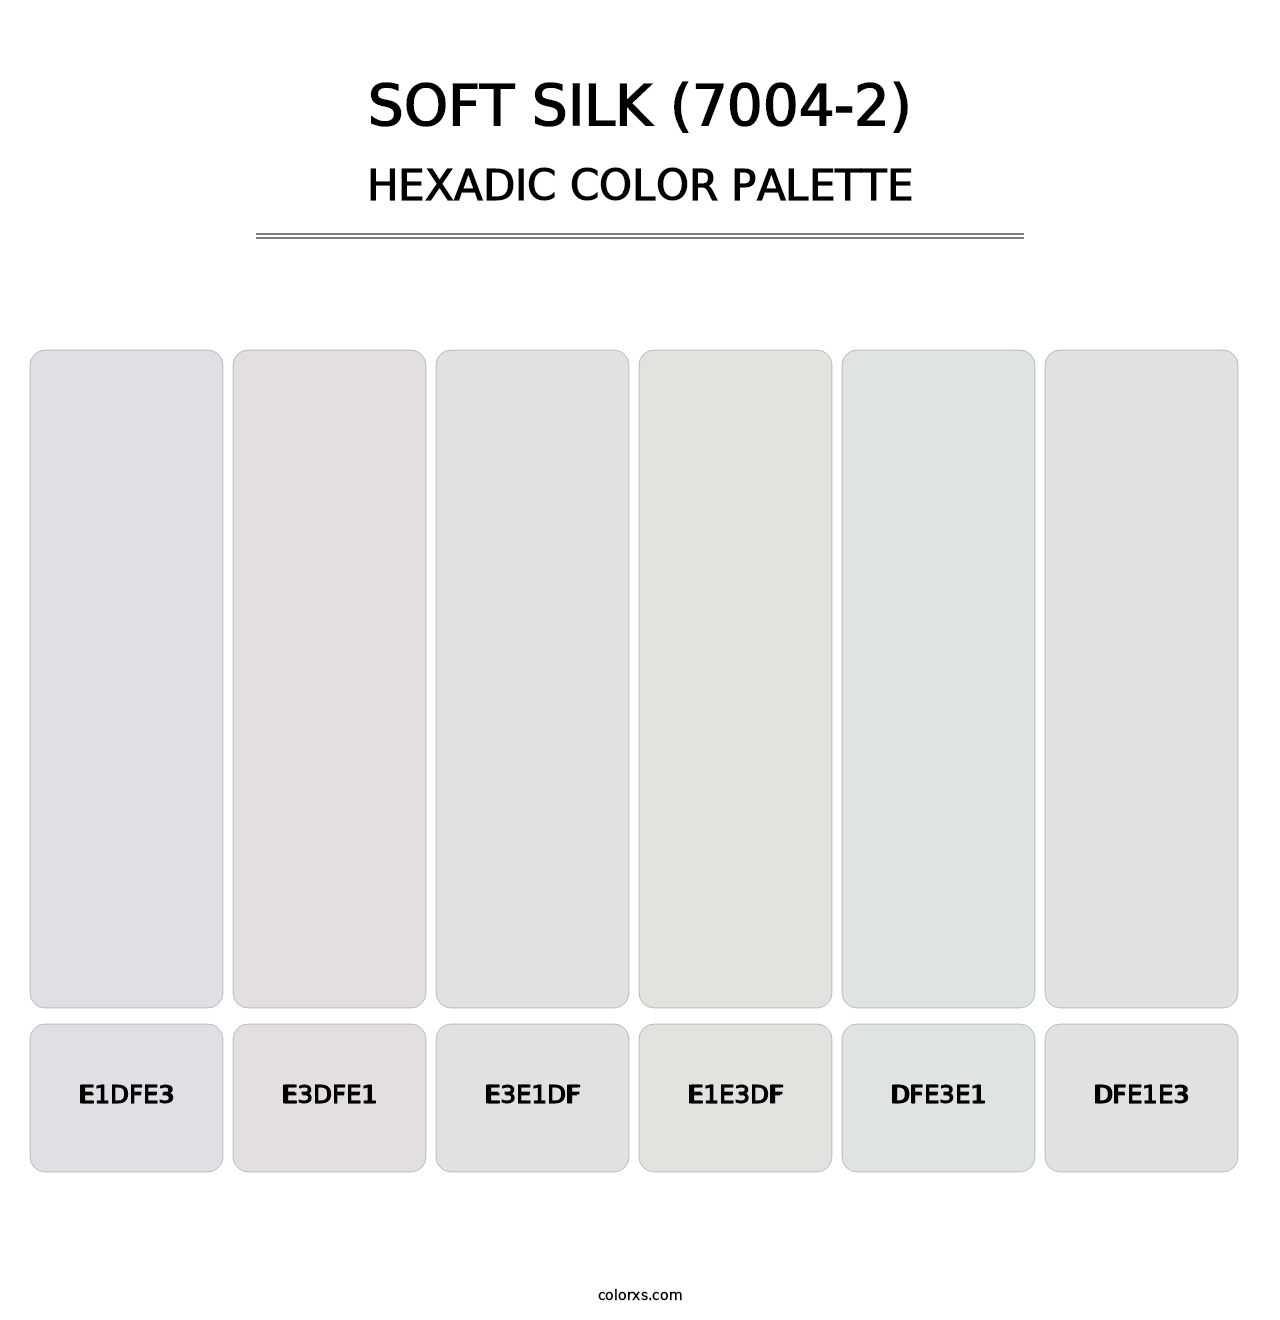 Soft Silk (7004-2) - Hexadic Color Palette